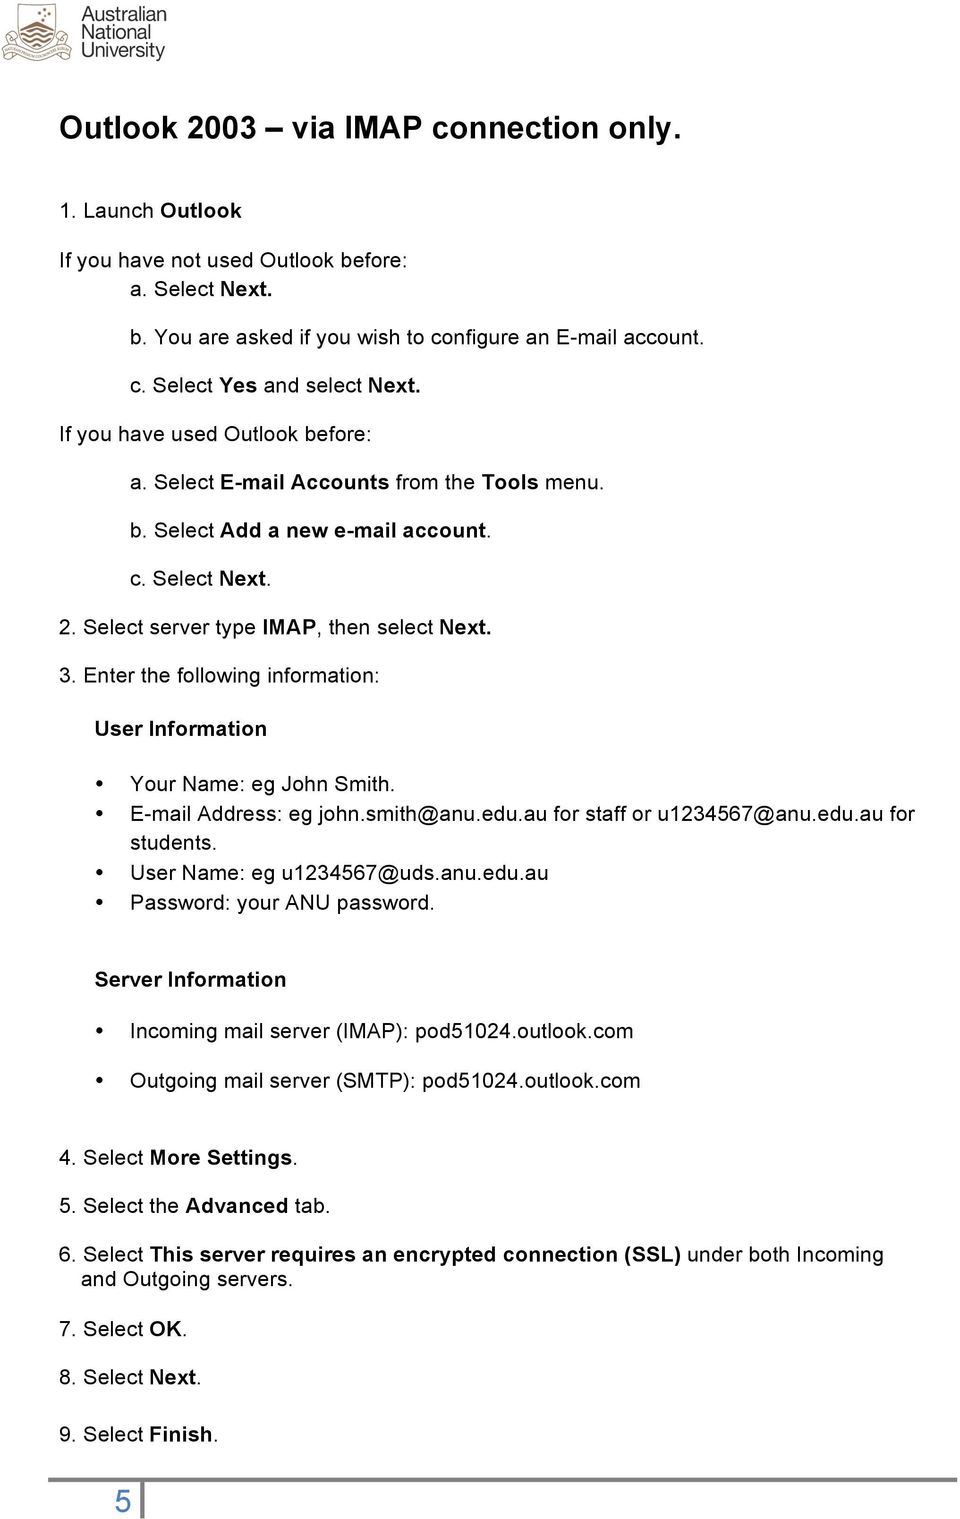 Enter the following information: User Information Your Name: eg John Smith. E-mail Address: eg john.smith@anu.edu.au for staff or u1234567@anu.edu.au for students. User Name: eg u1234567@uds.anu.edu.au Password: your ANU password.